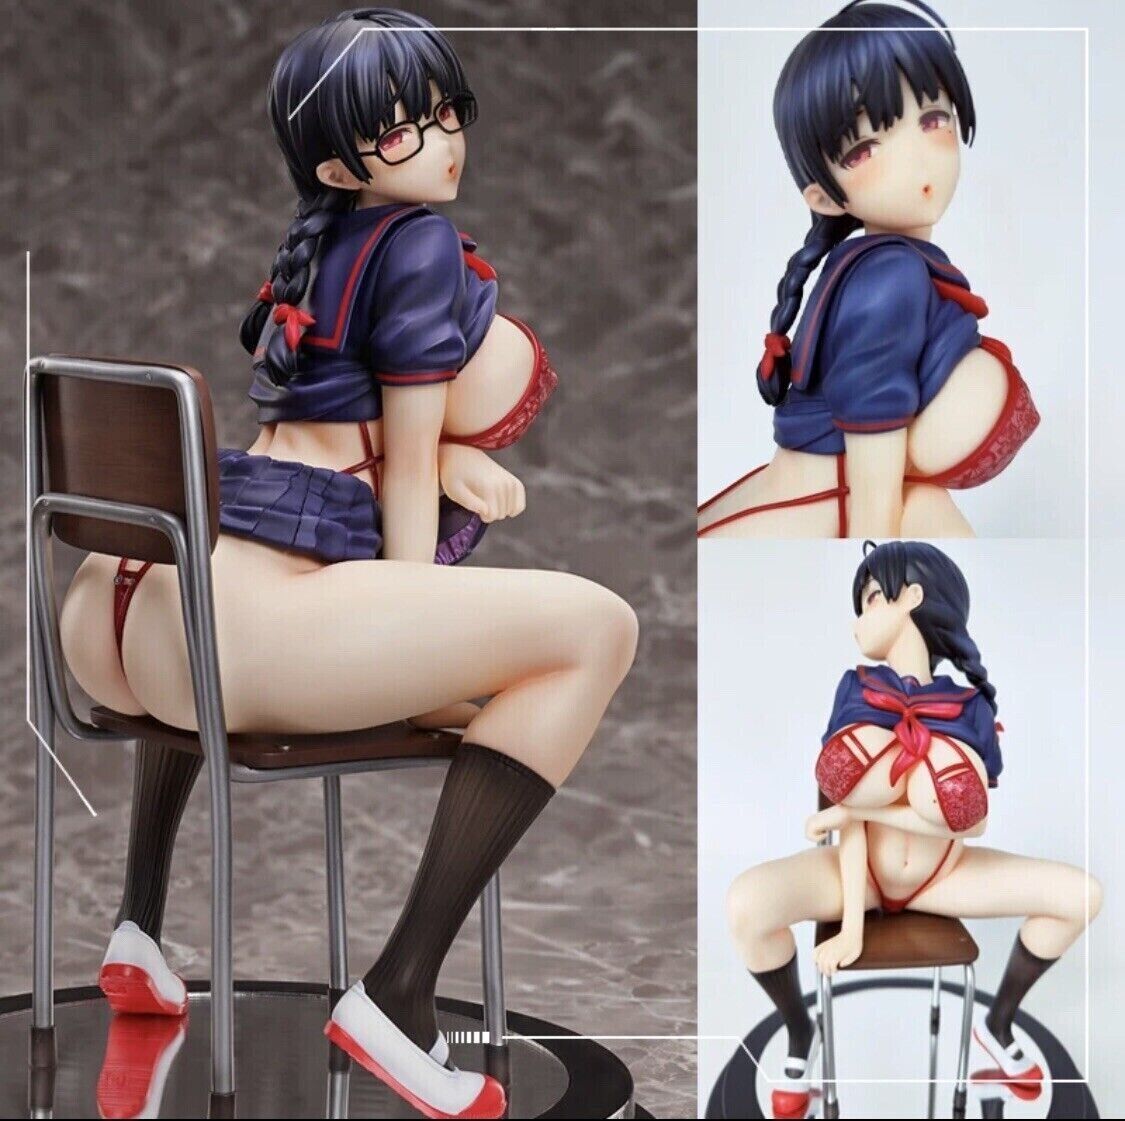 HOT Fuyuko Fujimi Hentai Girl Sitting Anime Action Figure Sexy Model Statue Toy